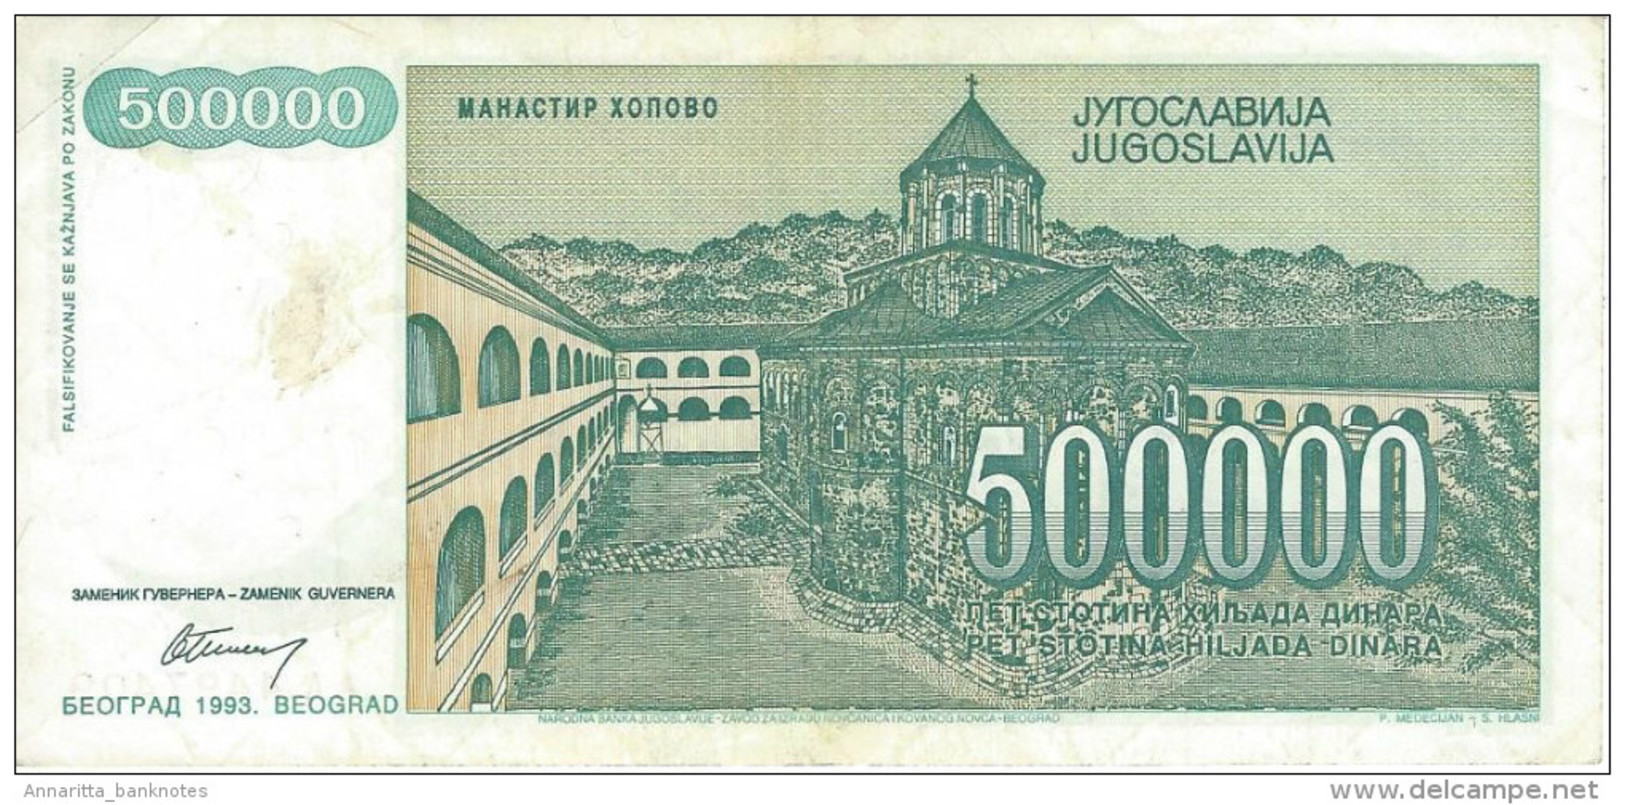 YUGOSLAVIA 500000 DINARA 1993 P-131 CIRC  [ YU131circ ] - Jugoslawien